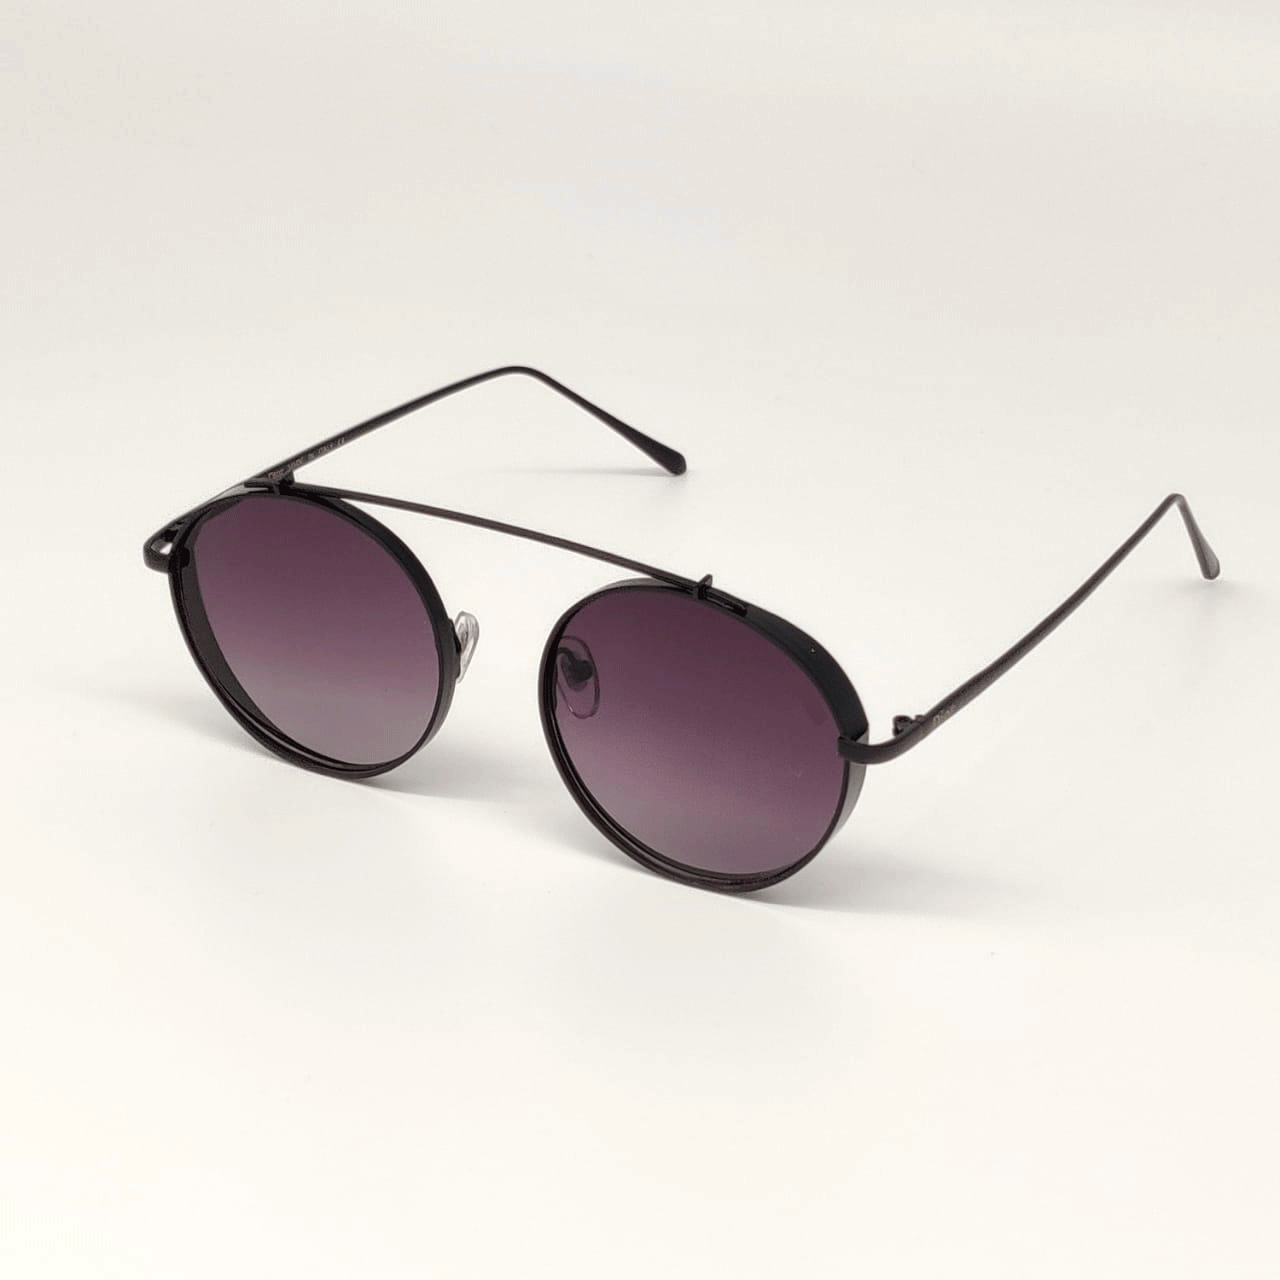 Most Stylish Metal Frame Round Sunglasses